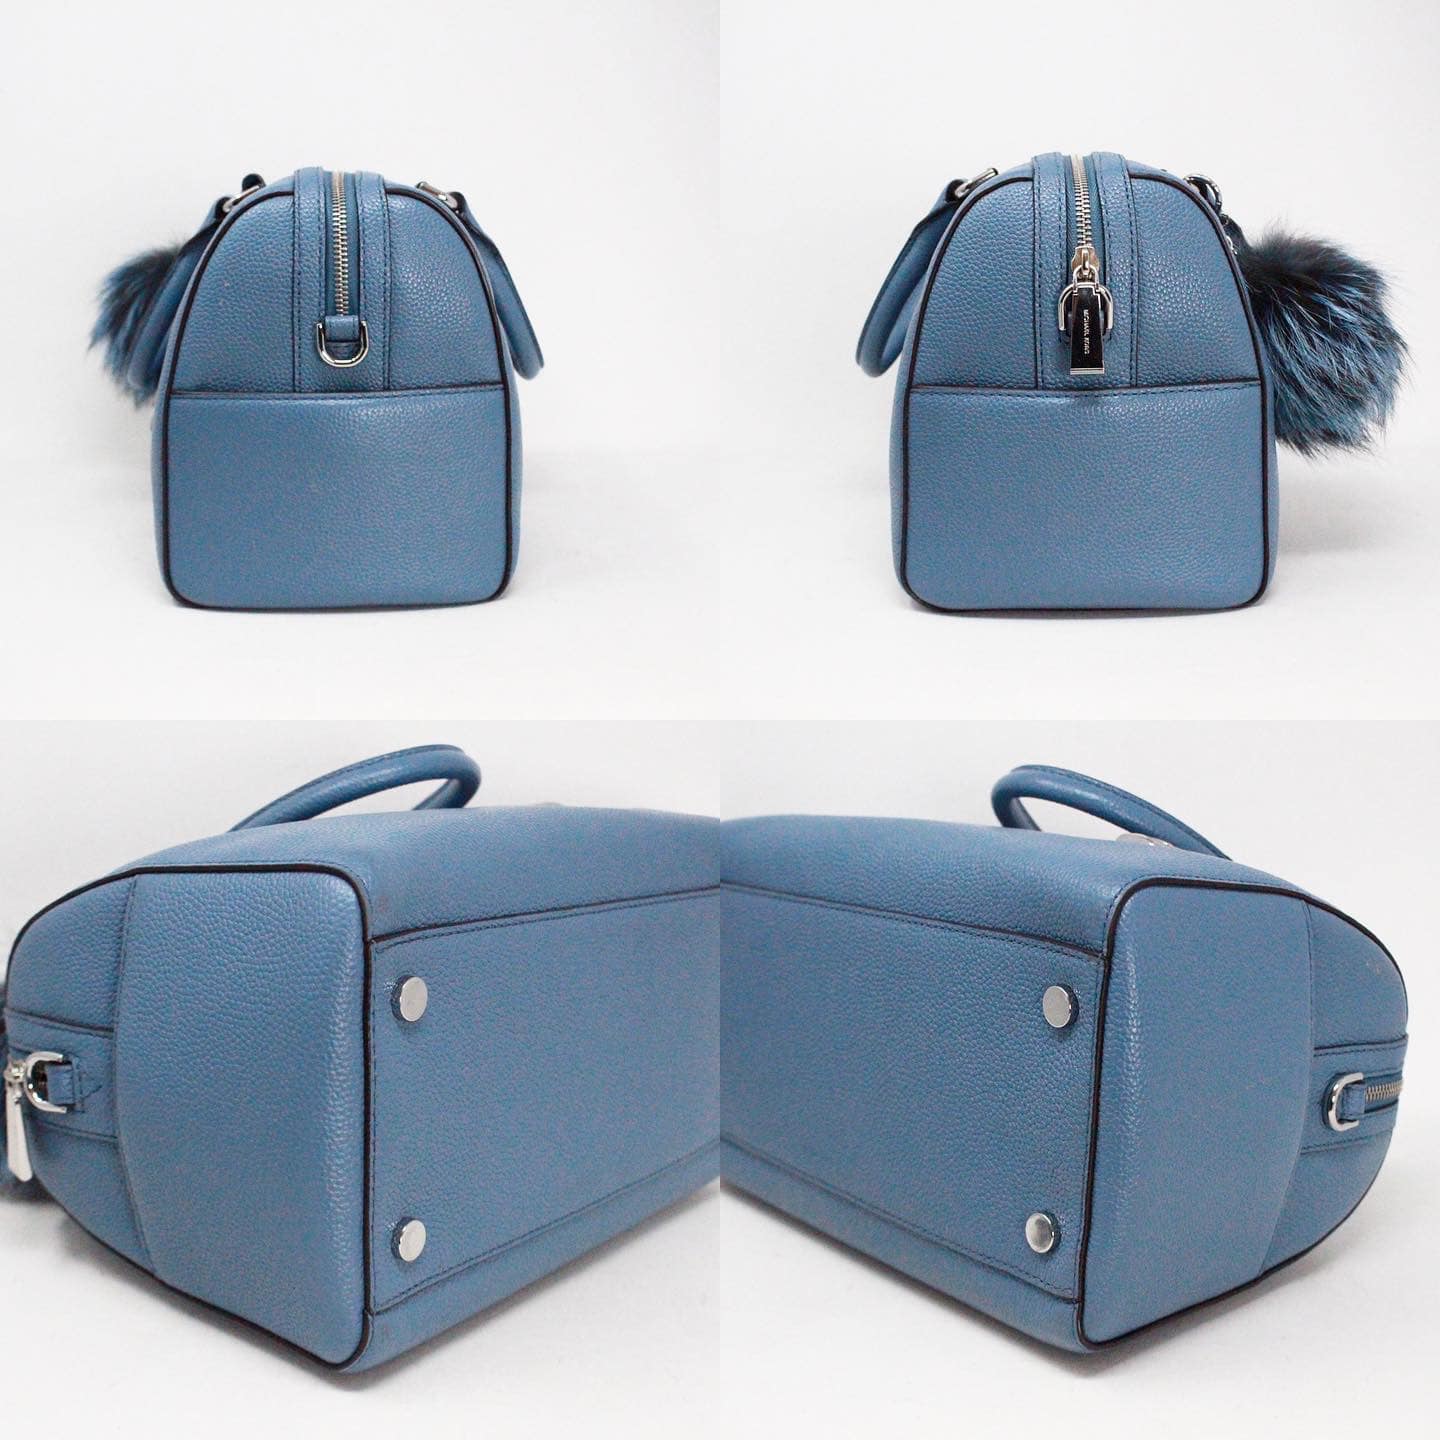 MICHAEL KORS #40188 Mercer Medium Blue Leather Duffle Bag with Matching  Wallet